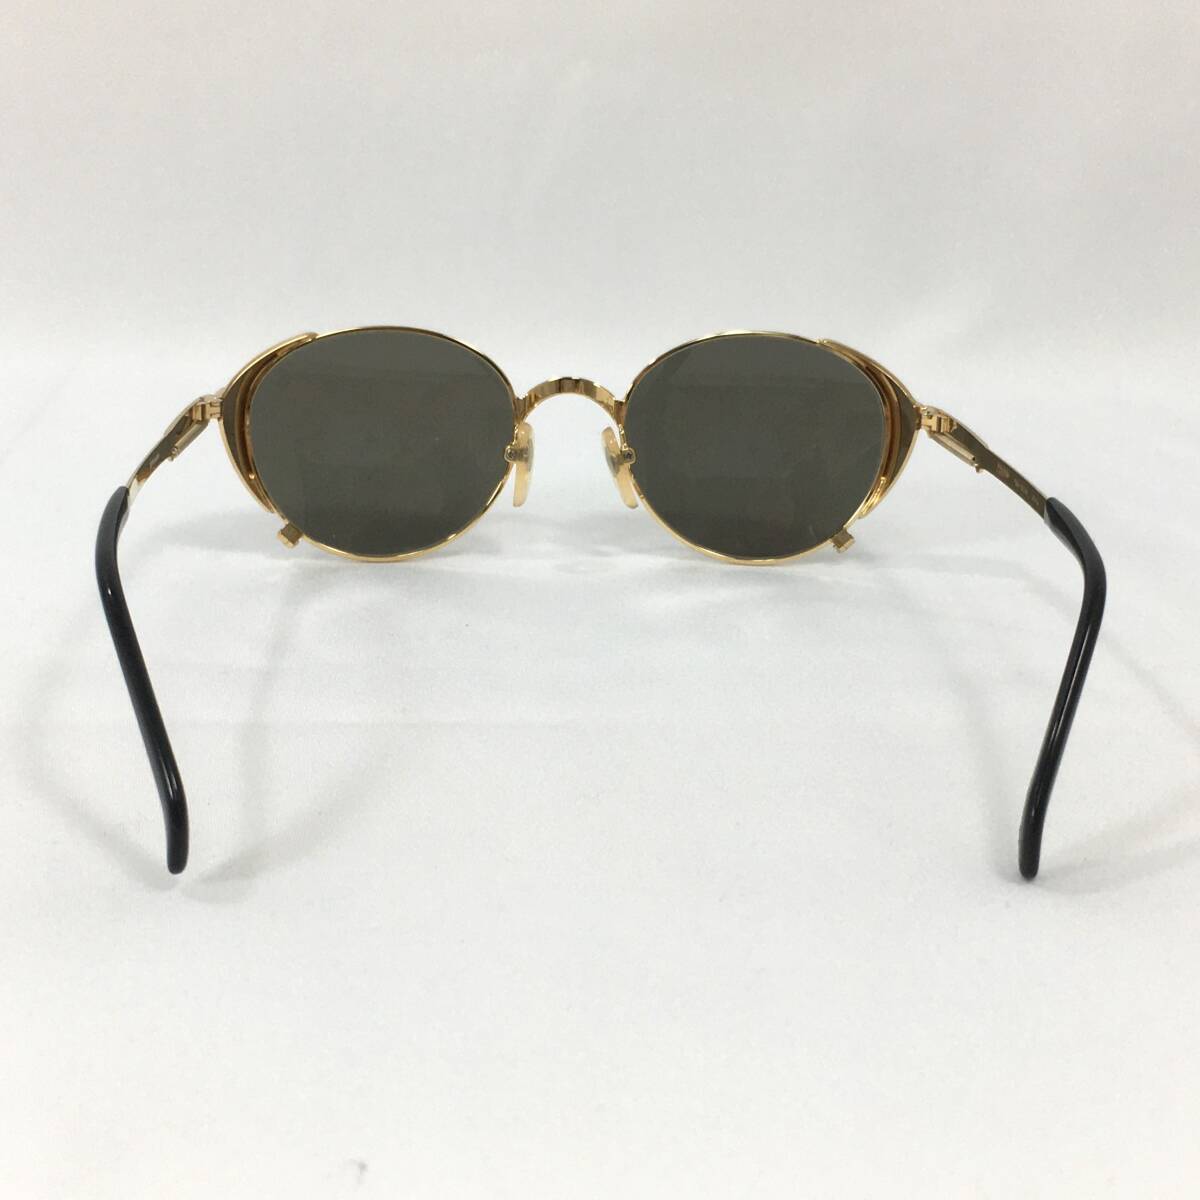  Jean-Paul Gaultier sunglasses 56-4174 Gold green case attaching made in Japan Vintage Jean Paul Gaultier